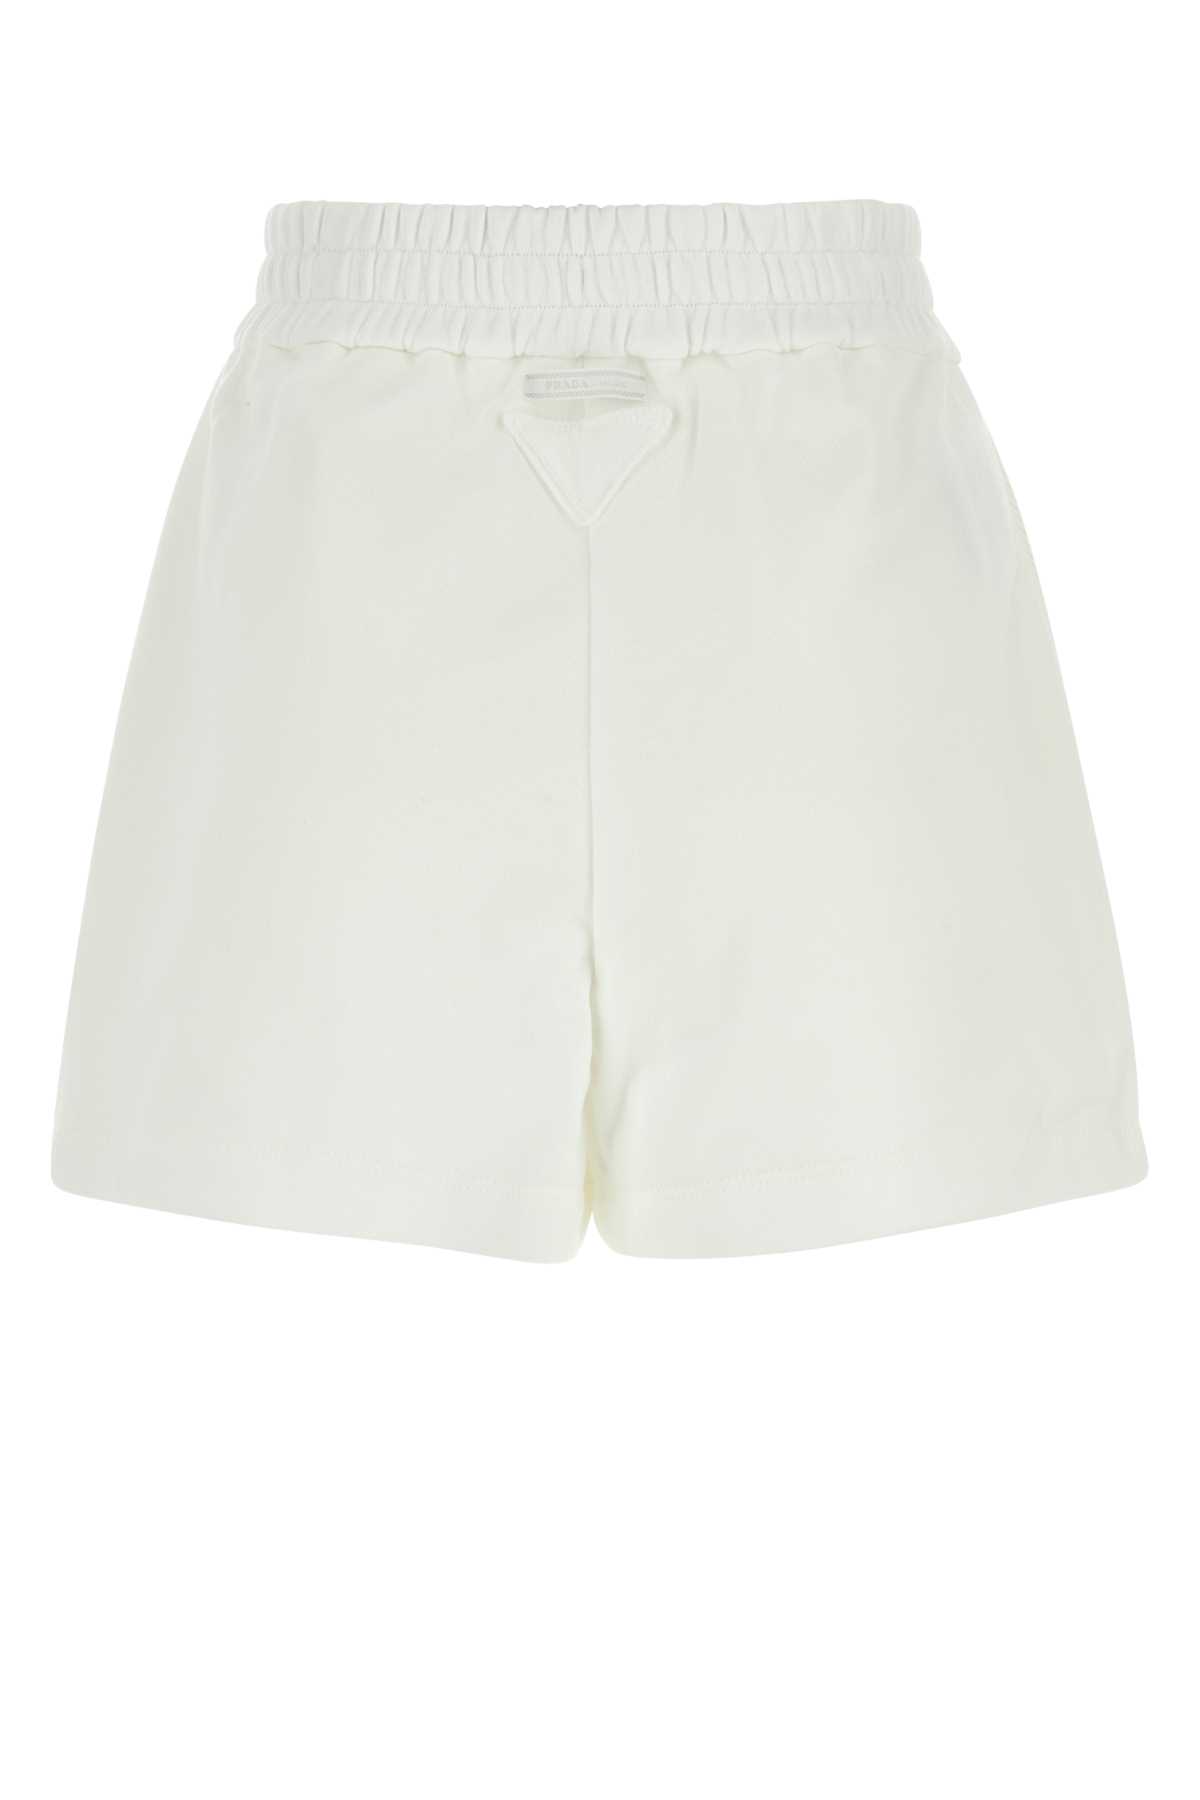 Prada White Cotton Shorts In Bianco